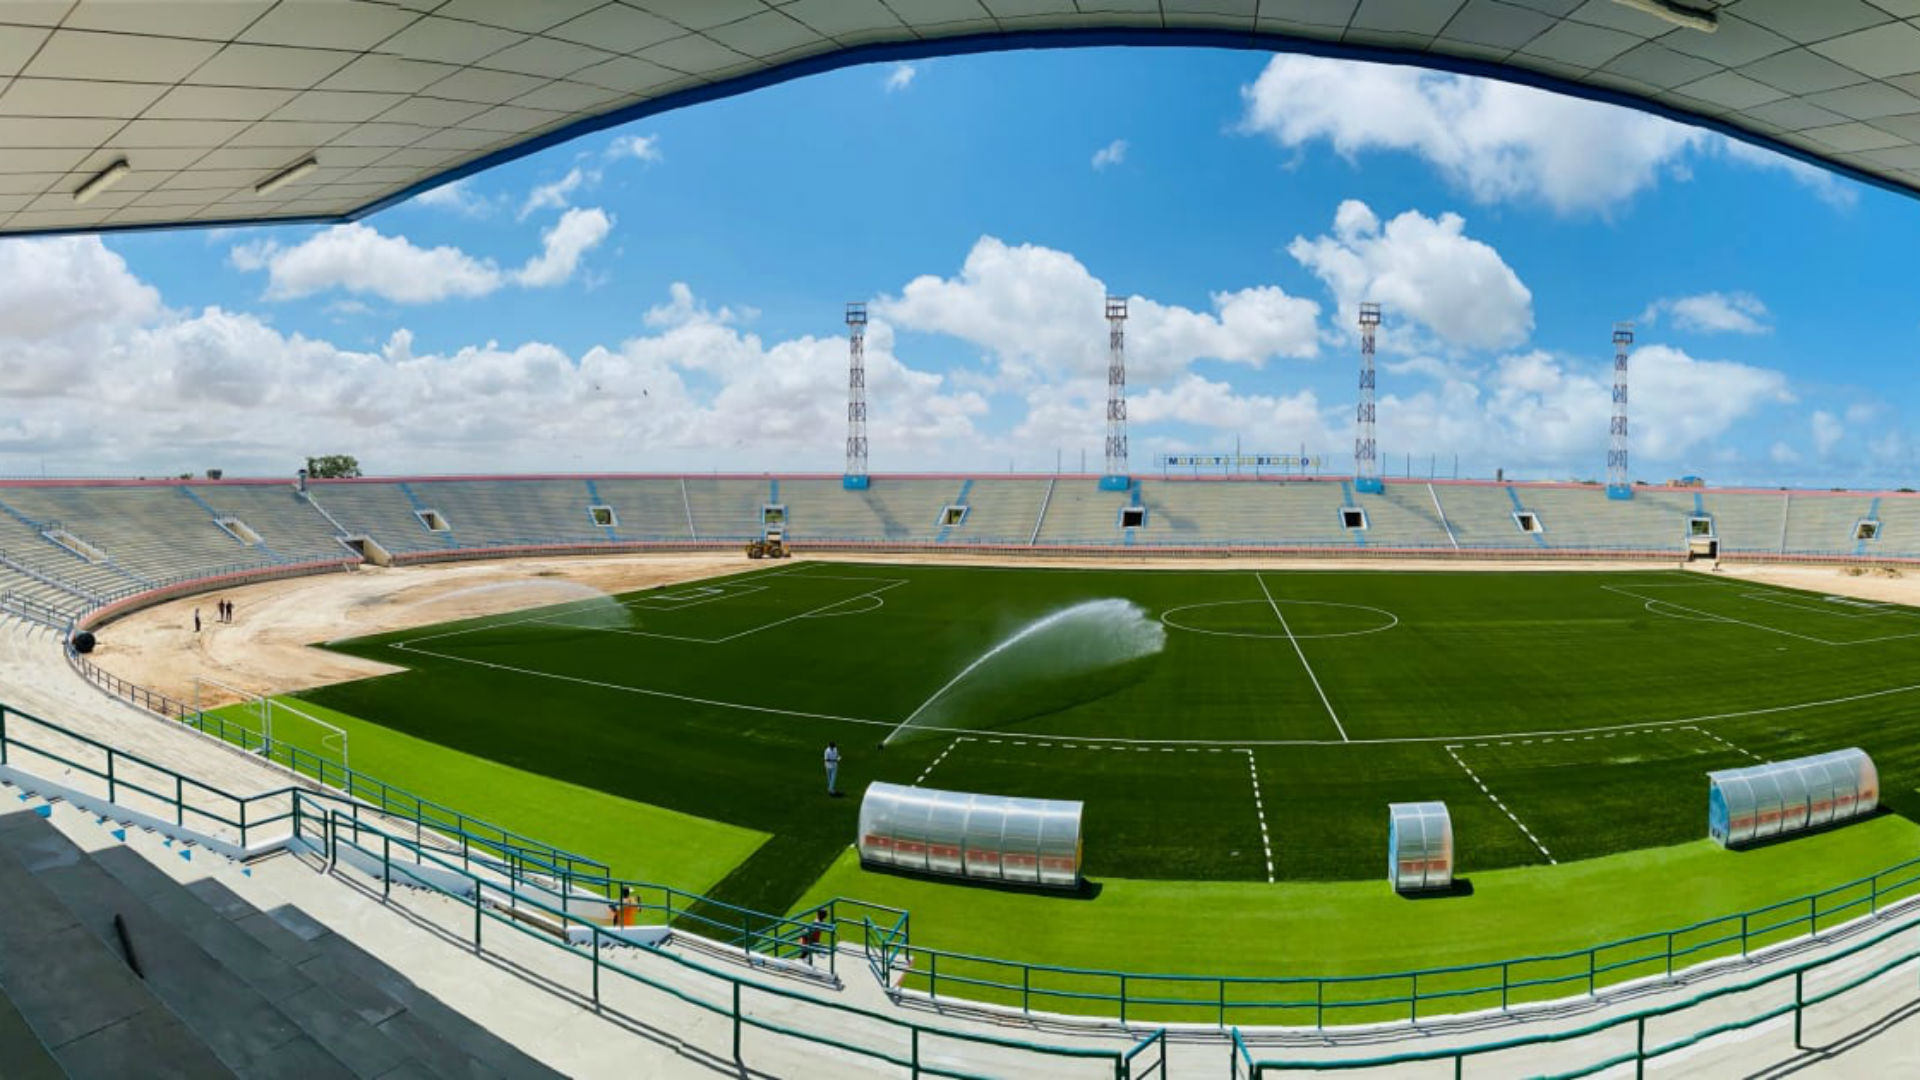 Ocean Stars looking forward to hosting matches at new Mogadishu Stadium